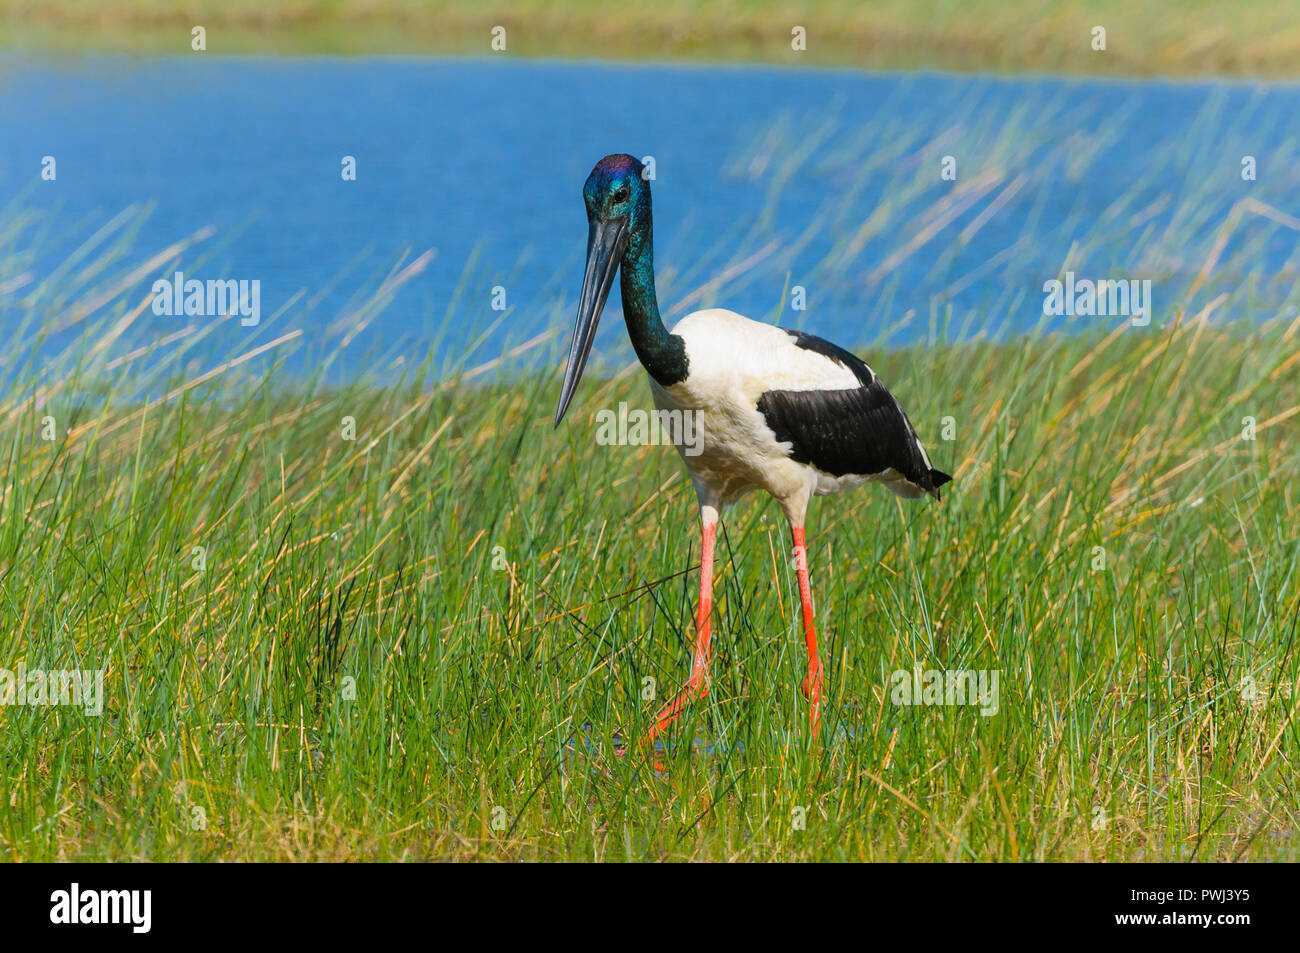 Image of the natural hunting behaviors of the Australasian Stork, Black-neck Stork or, the Australian Jabiru stalking through wetland habitats. Stock Photo